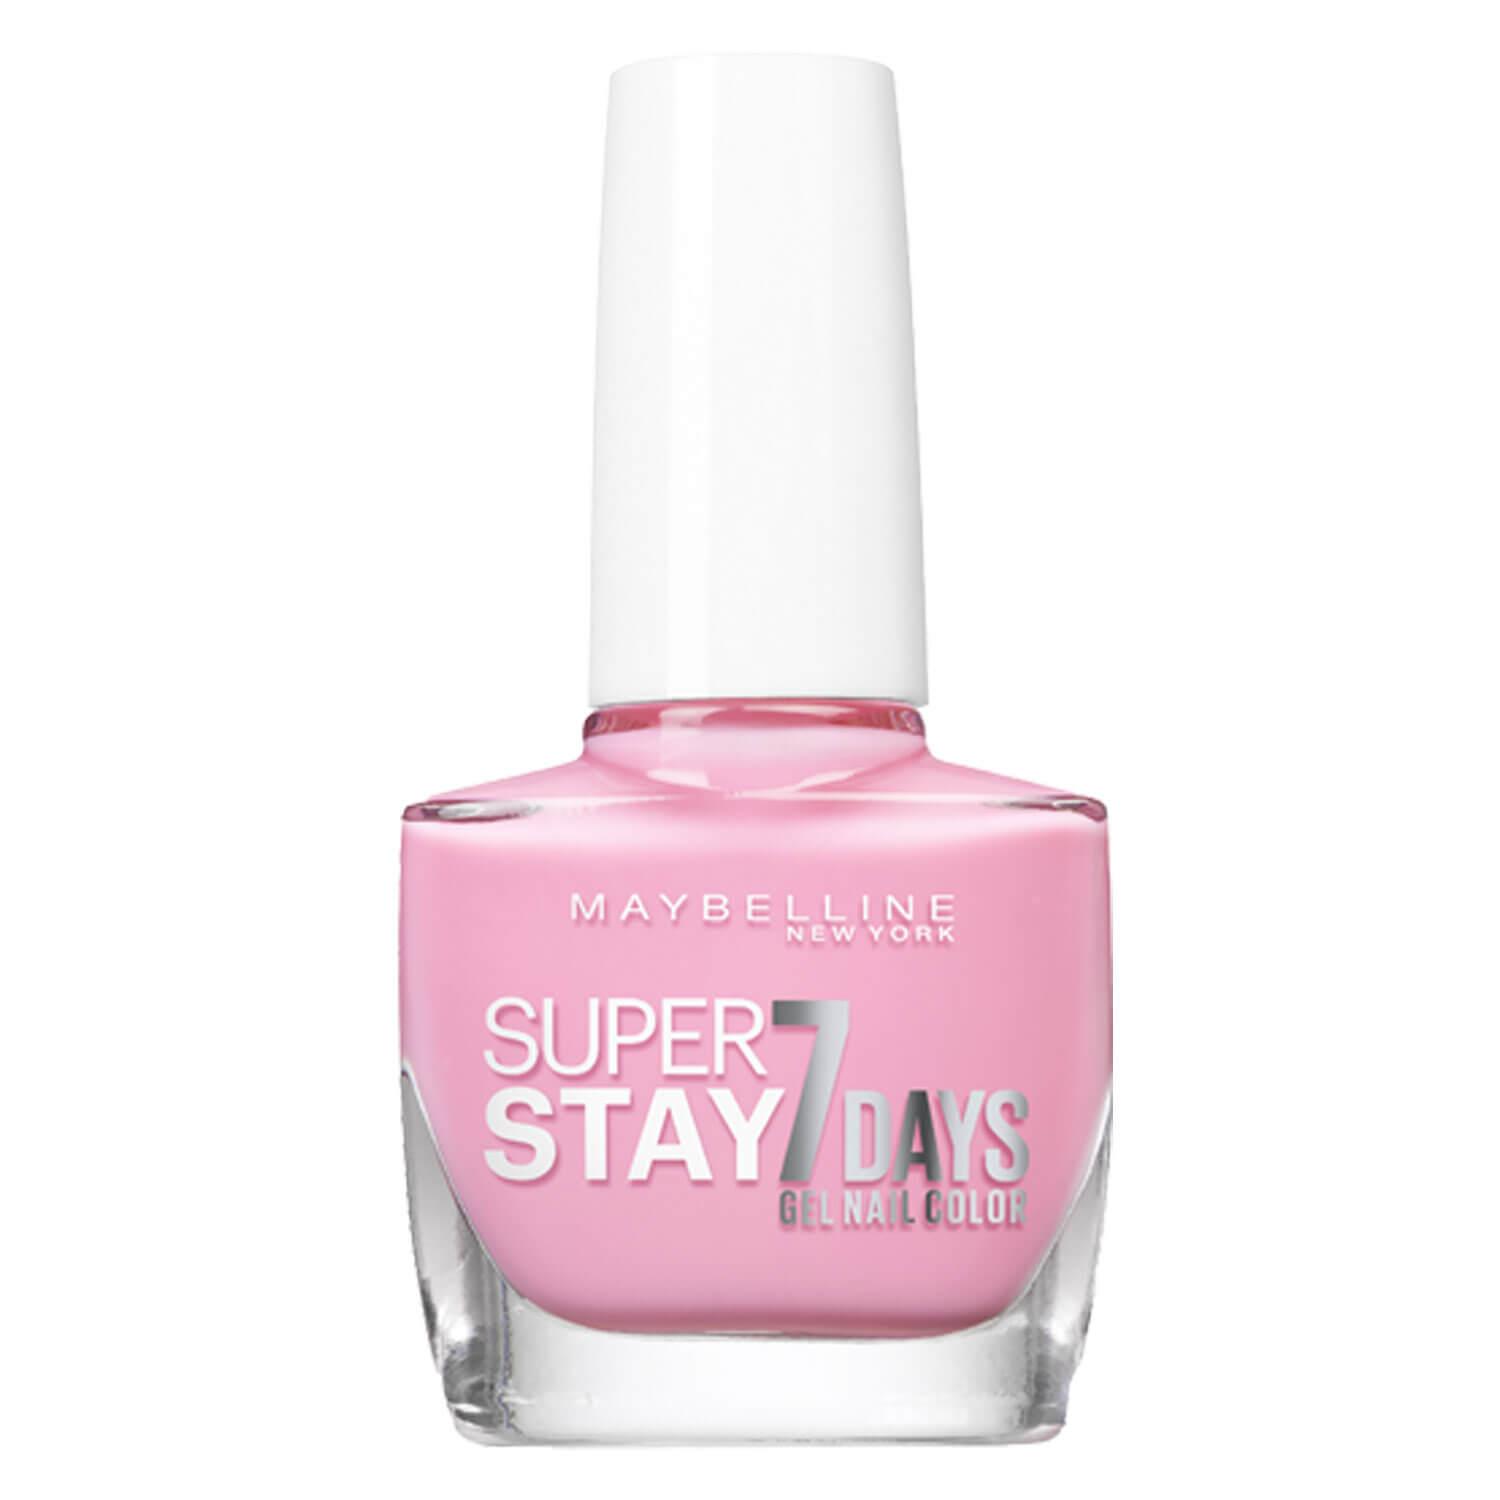 Maybelline NY Nails - Super Stay 7 Days Nail Polish No. 120 Flushed Pink